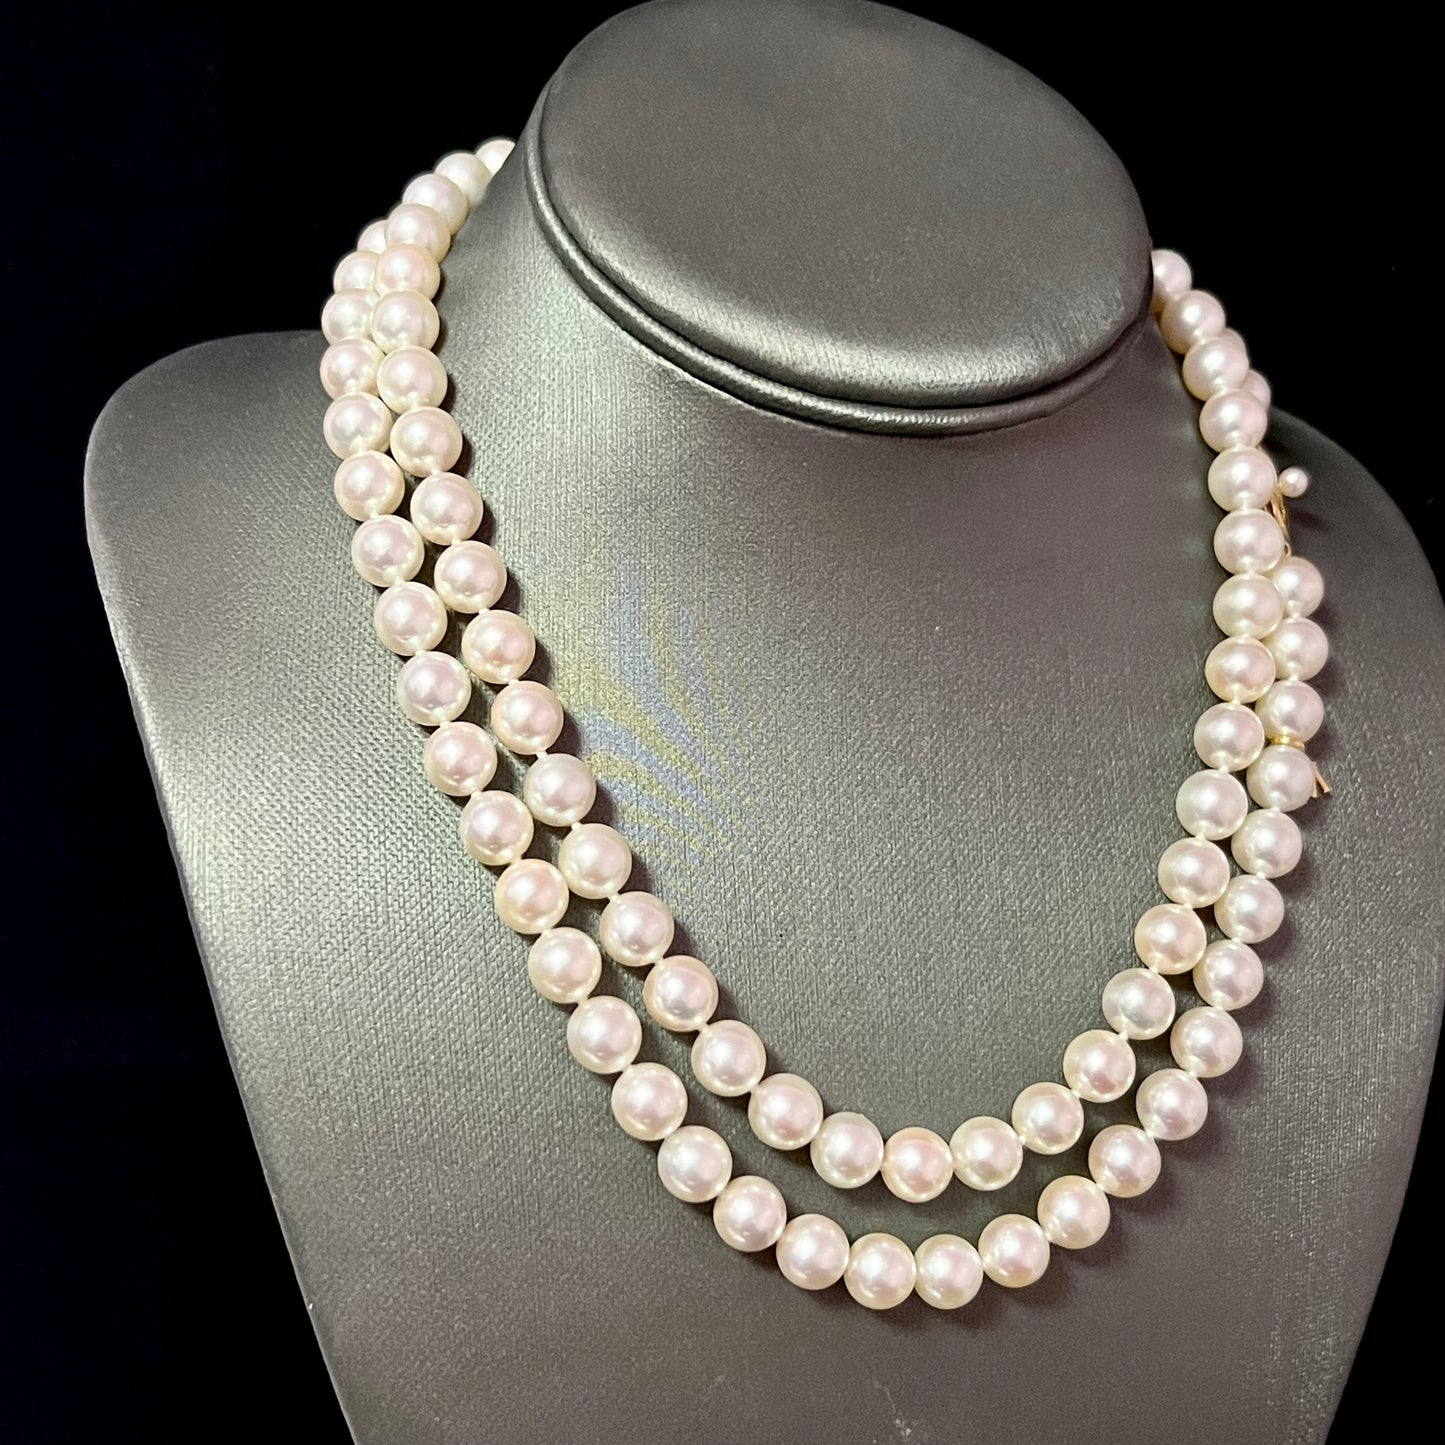 Mikimoto Estate Akoya Pearl Necklace 36" 18k Y Gold 9 mm Certified $56,000 M56000 - Certified Fine Jewelry